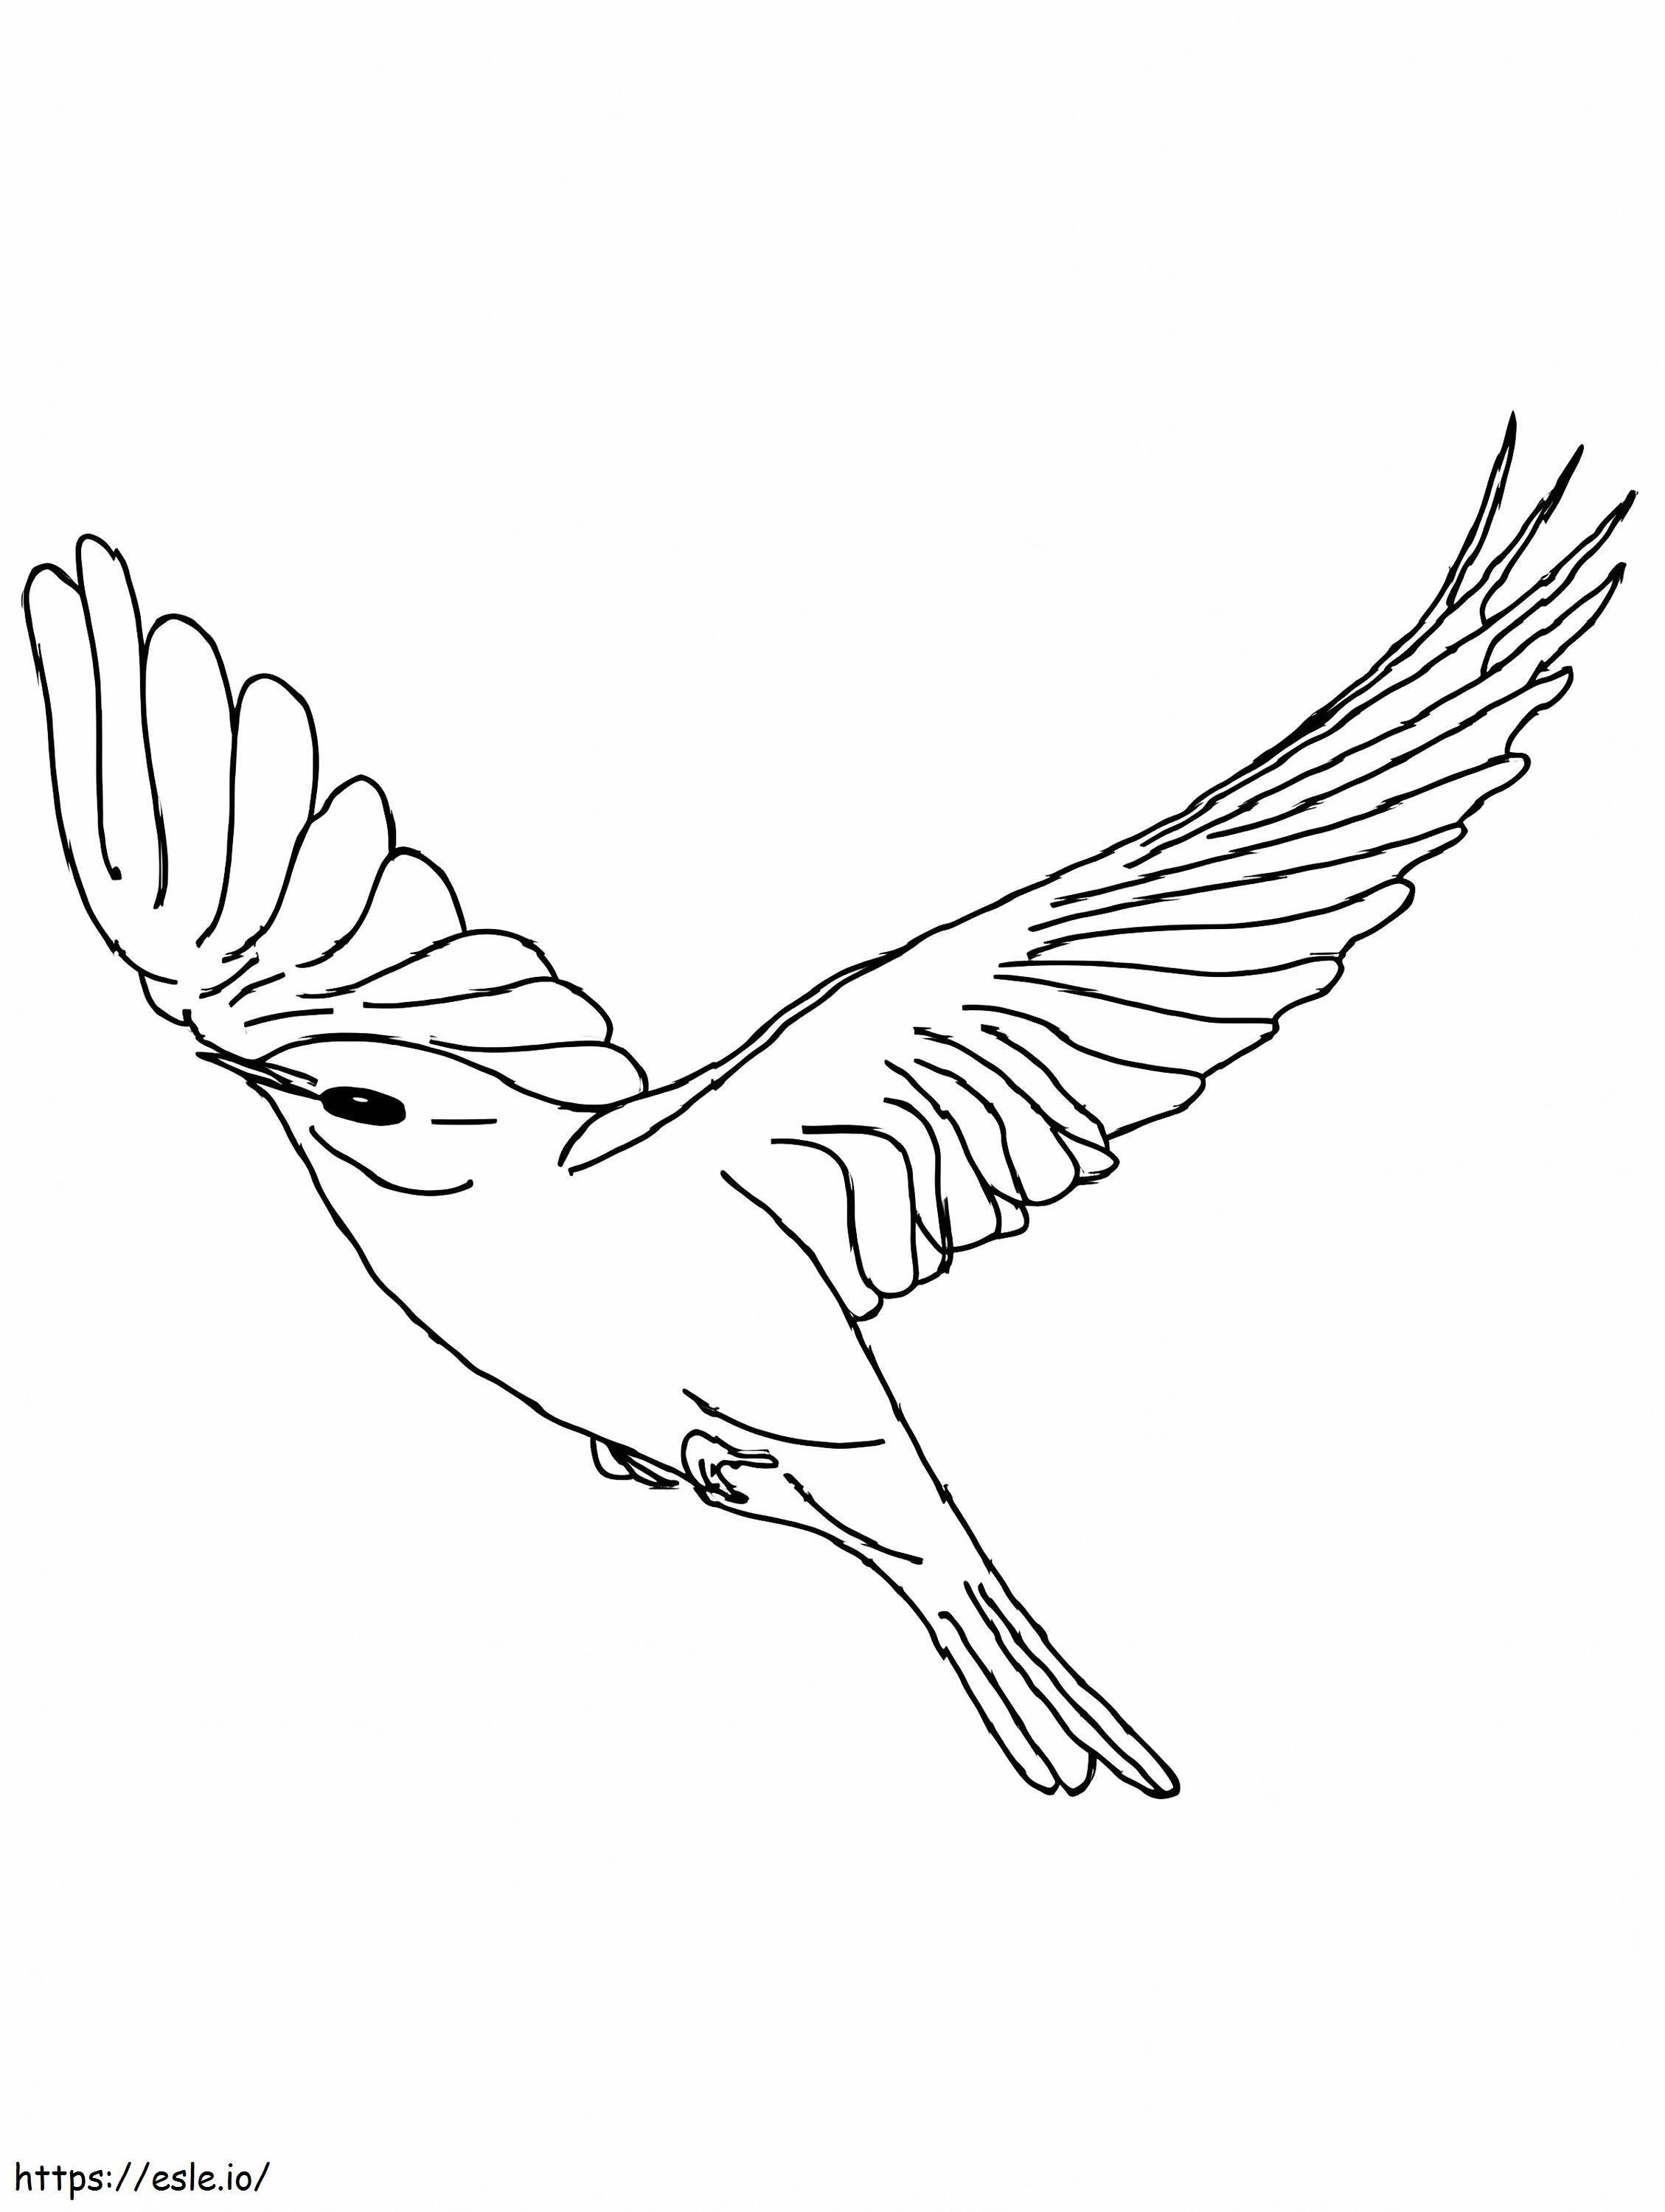 Coloriage Vol d'oiseau canari à imprimer dessin